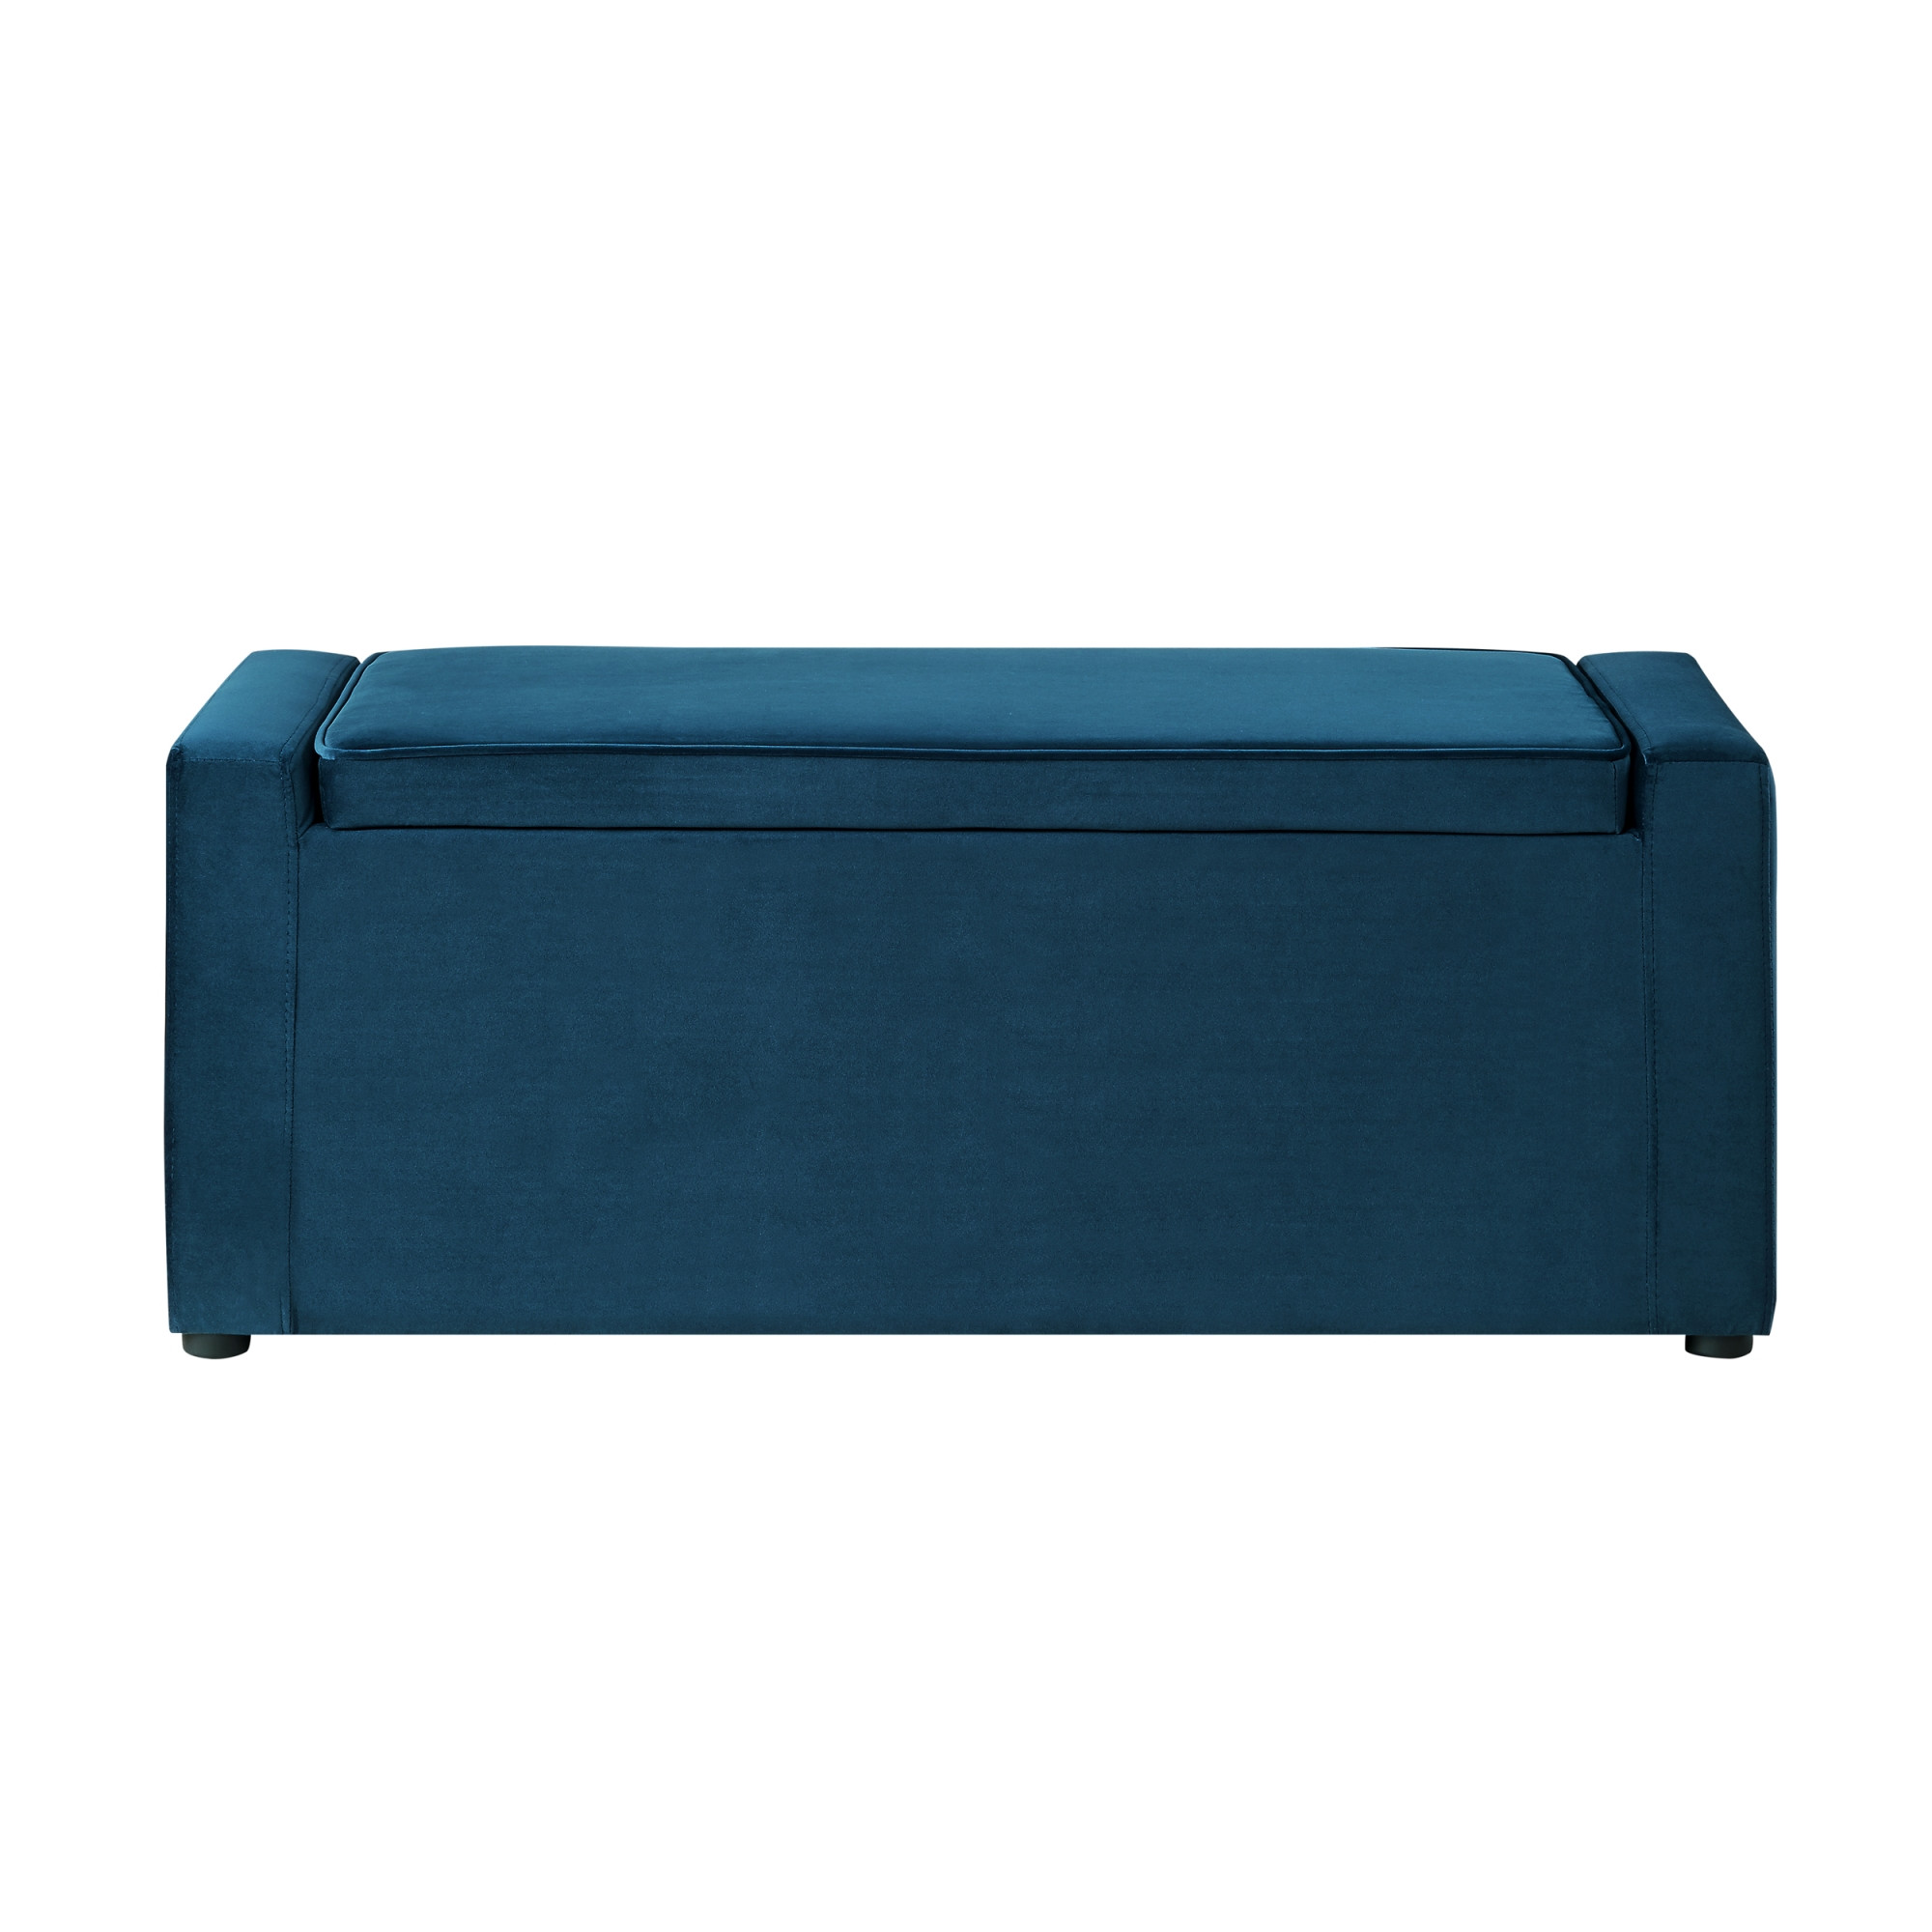 47" Navy Blue and Black Upholstered Velvet Bench with Flip top, Shoe Storage-530672-1